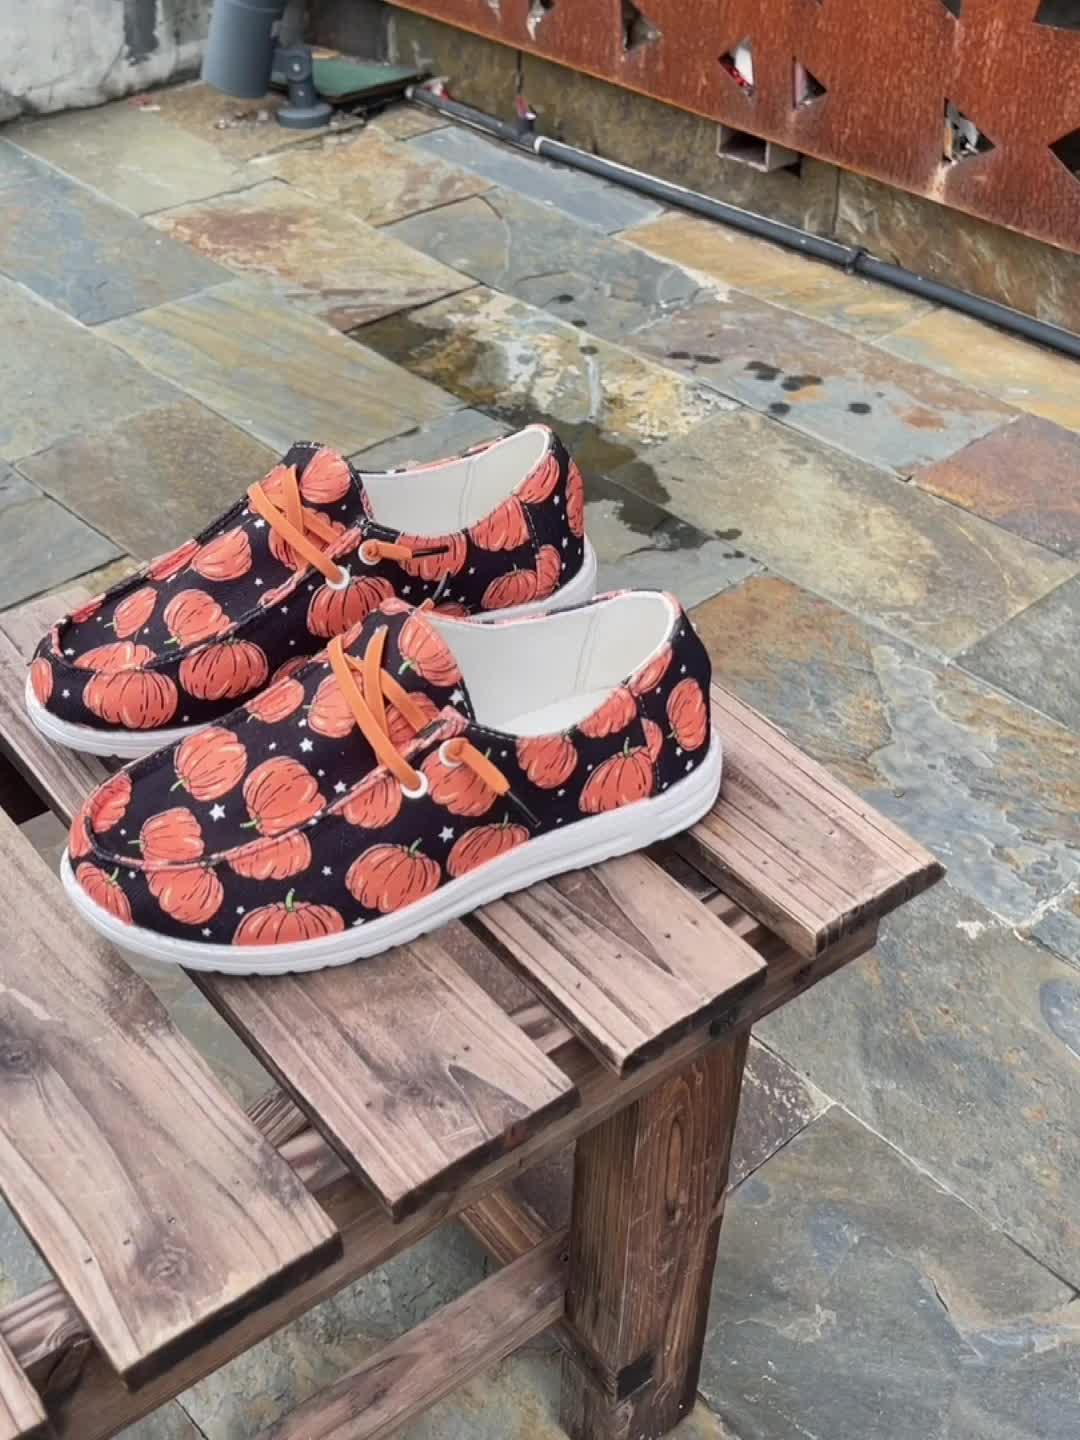 Pumpkin Pattern Canvas Shoes, Lace Up Low Top Flats